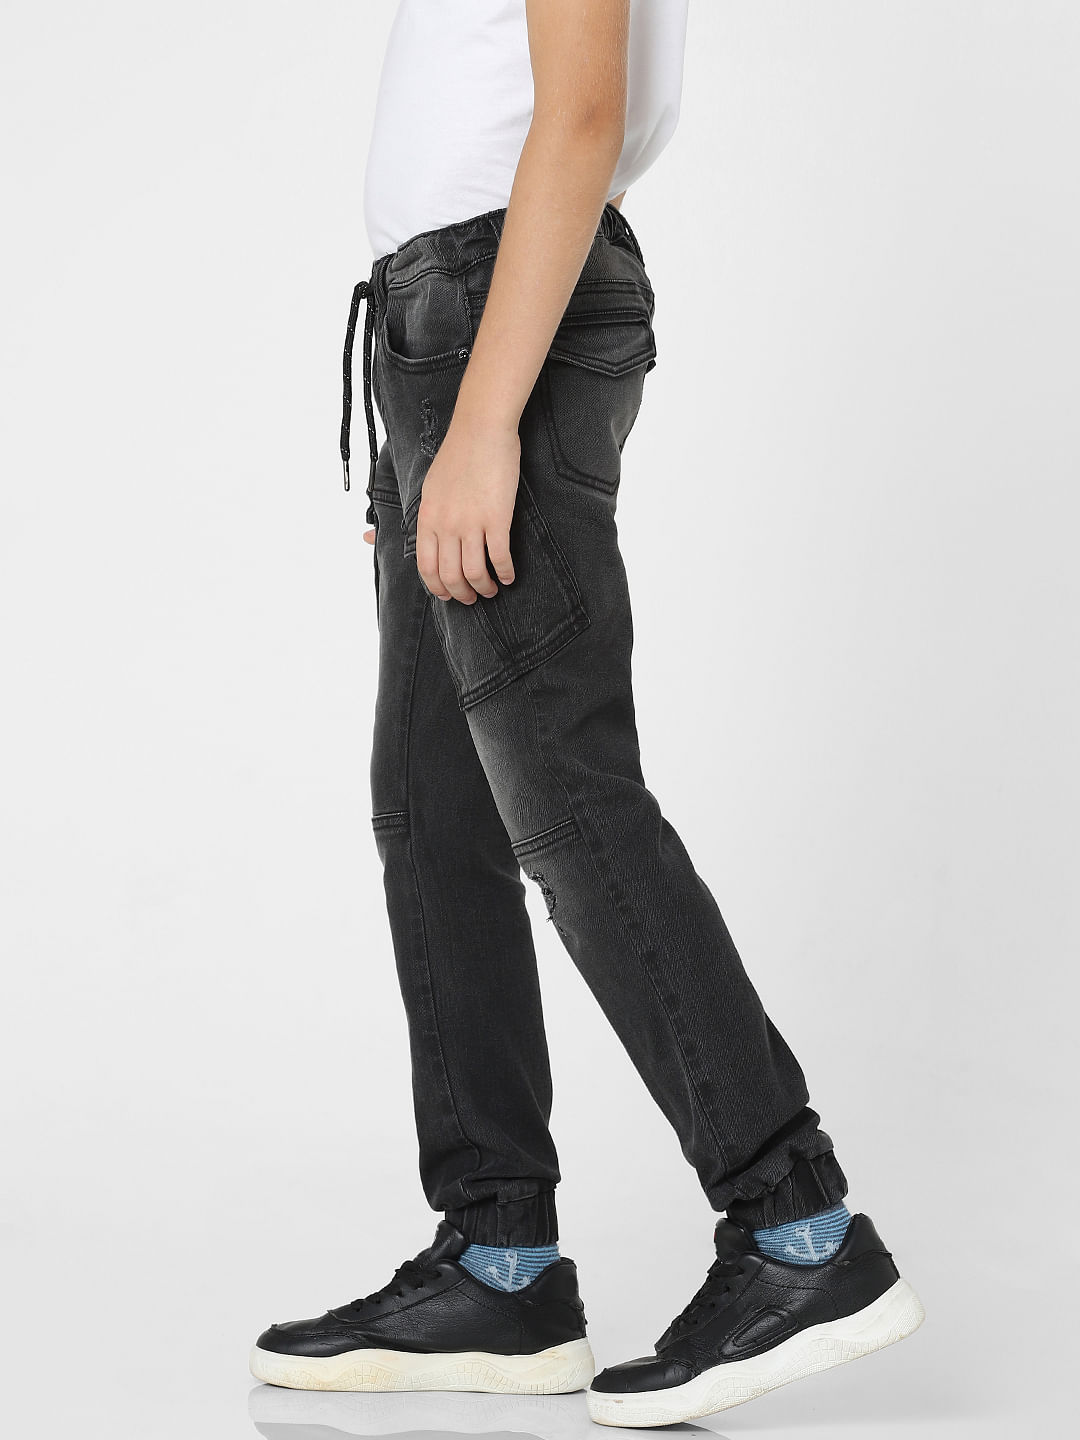 Denim Jeans 195GSM Black Boys Trousers, Size: 34 at best price in Gurugram